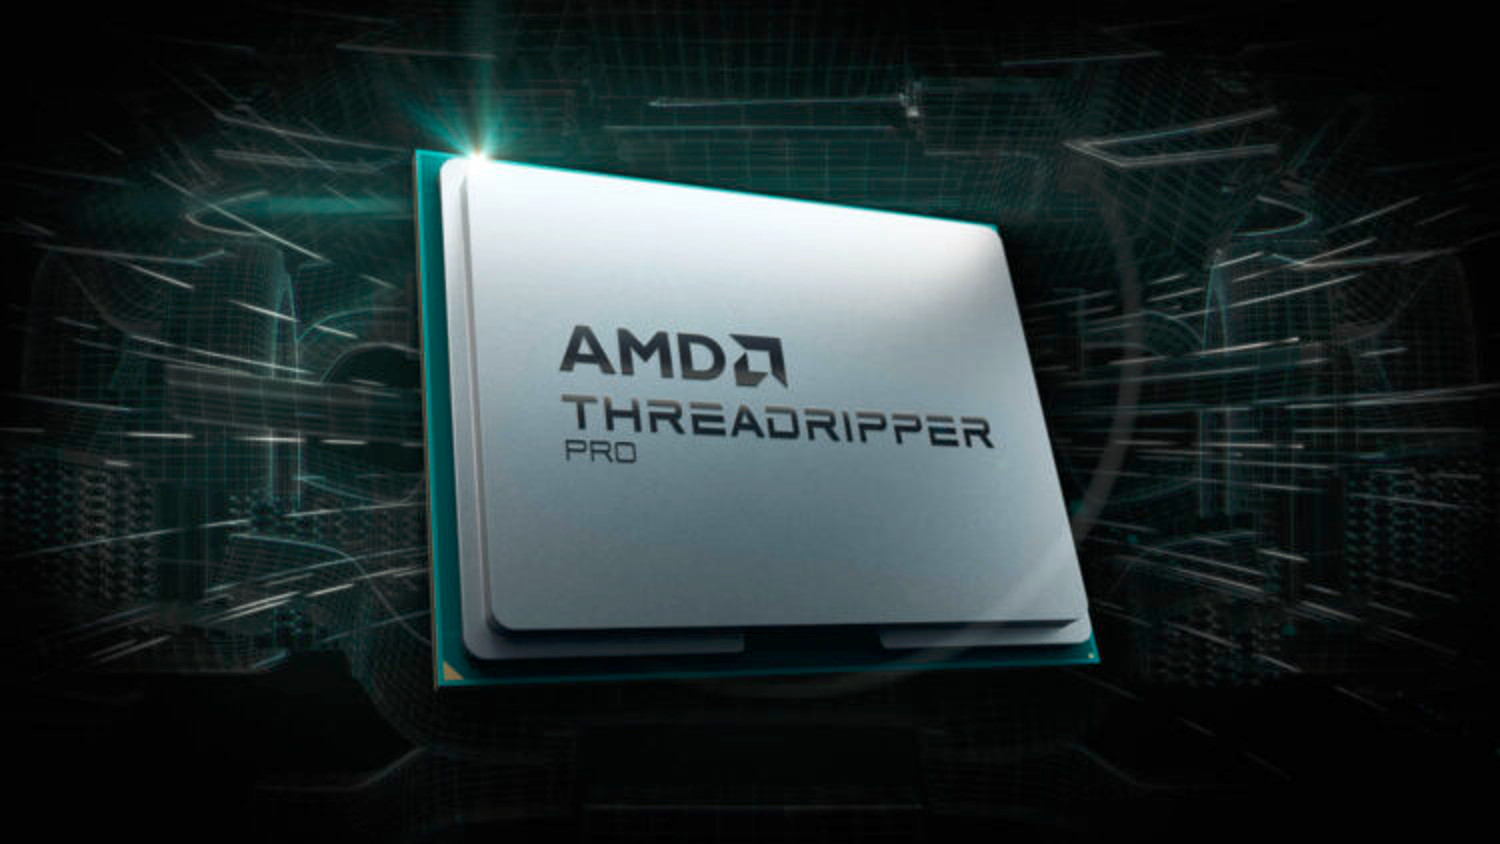 On The Story of AMD's Ryzen Threadripper Product Development